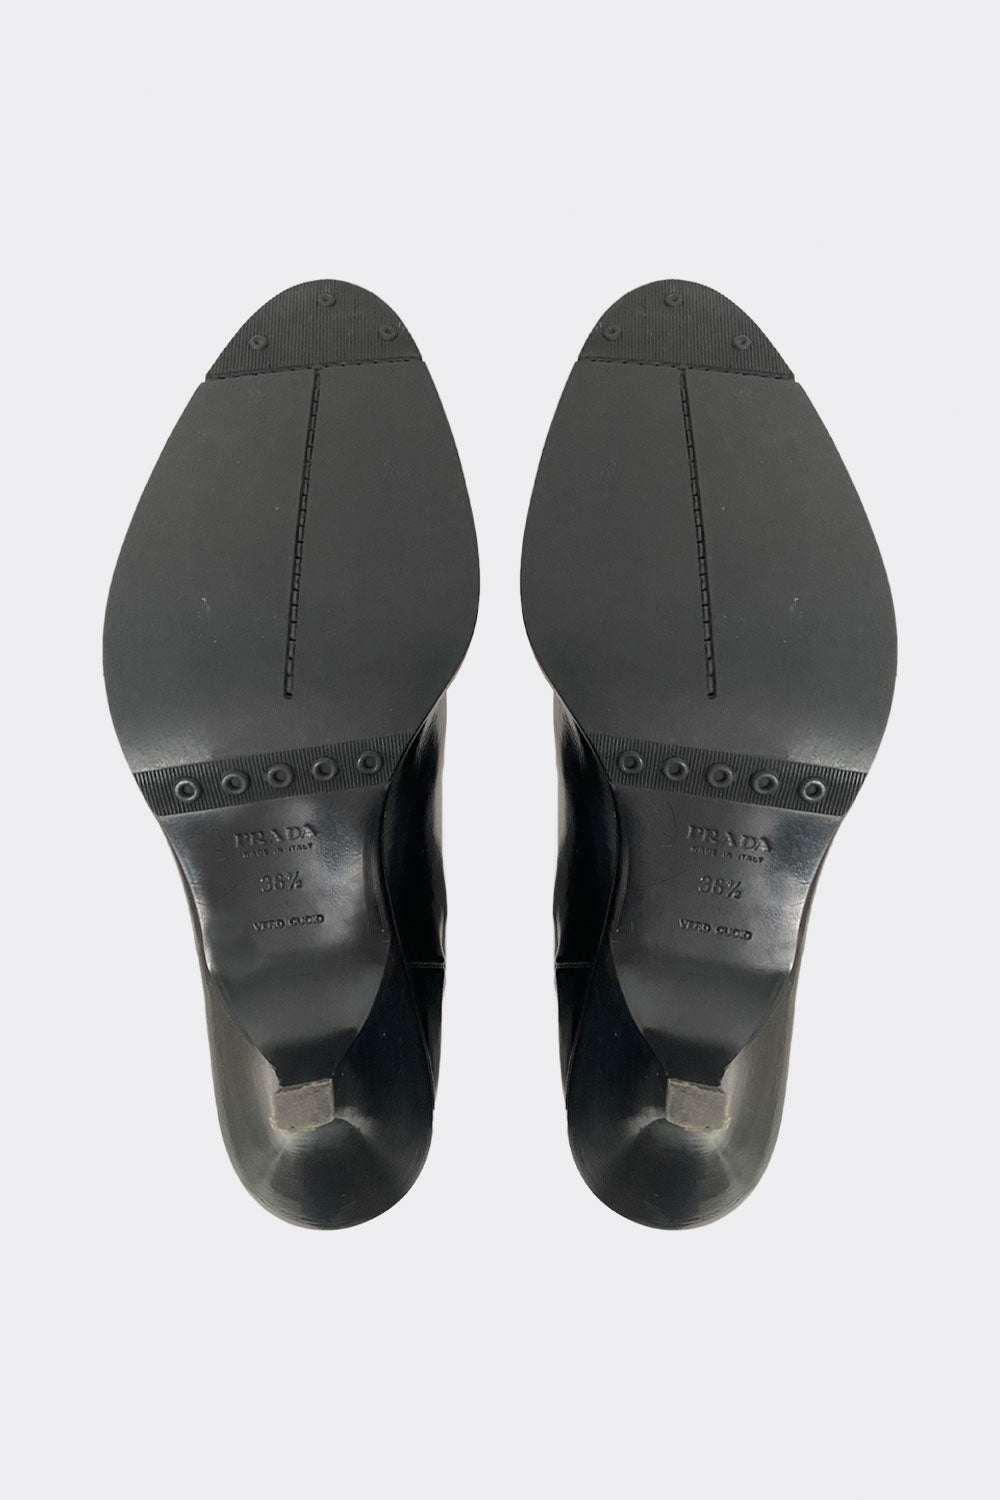 Prada Minimalist Boots Size 36.5 (UK 3.5)